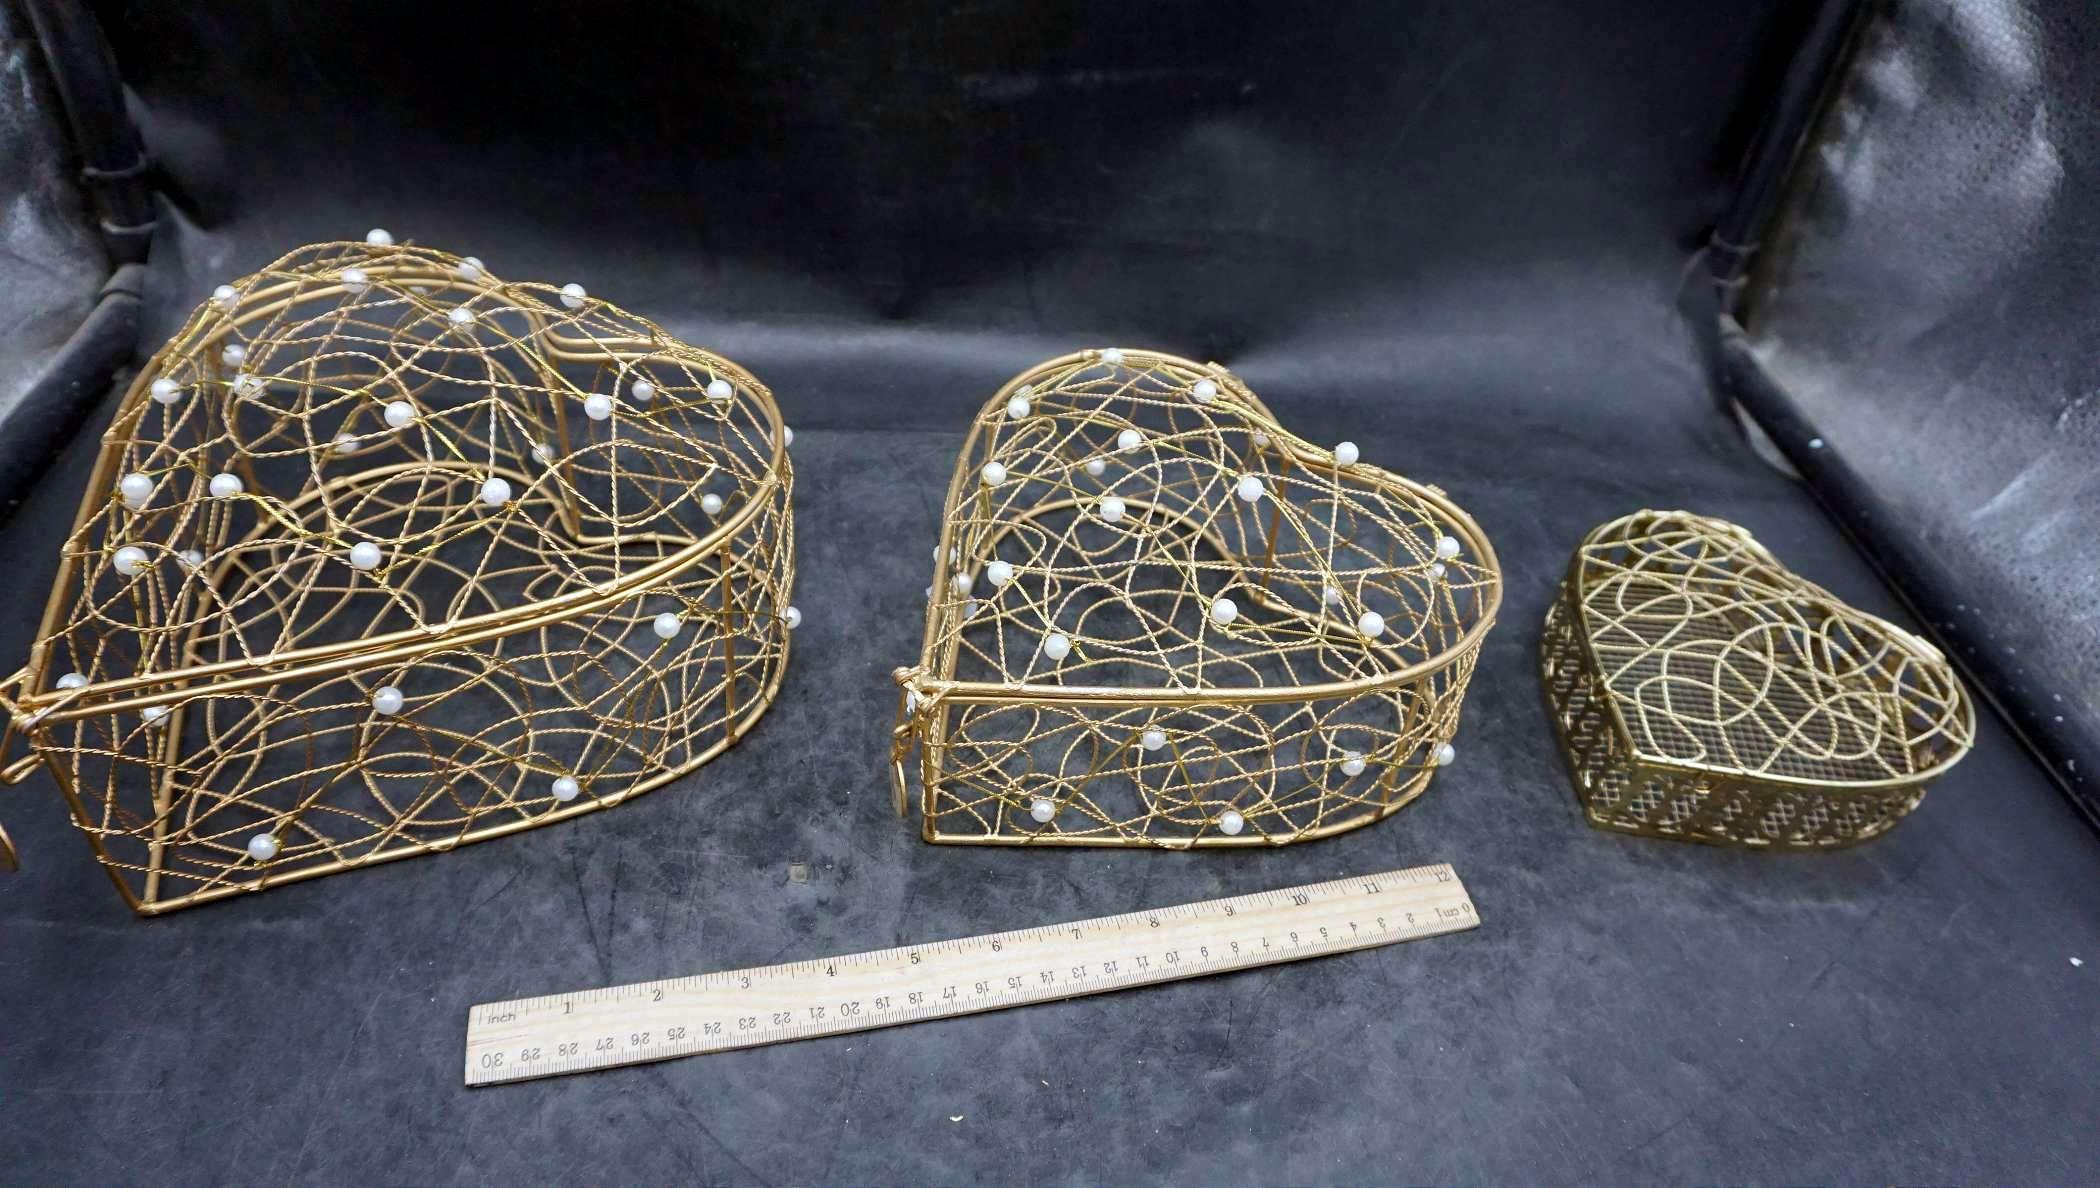 3 - Heart Shaped Wire Baskets